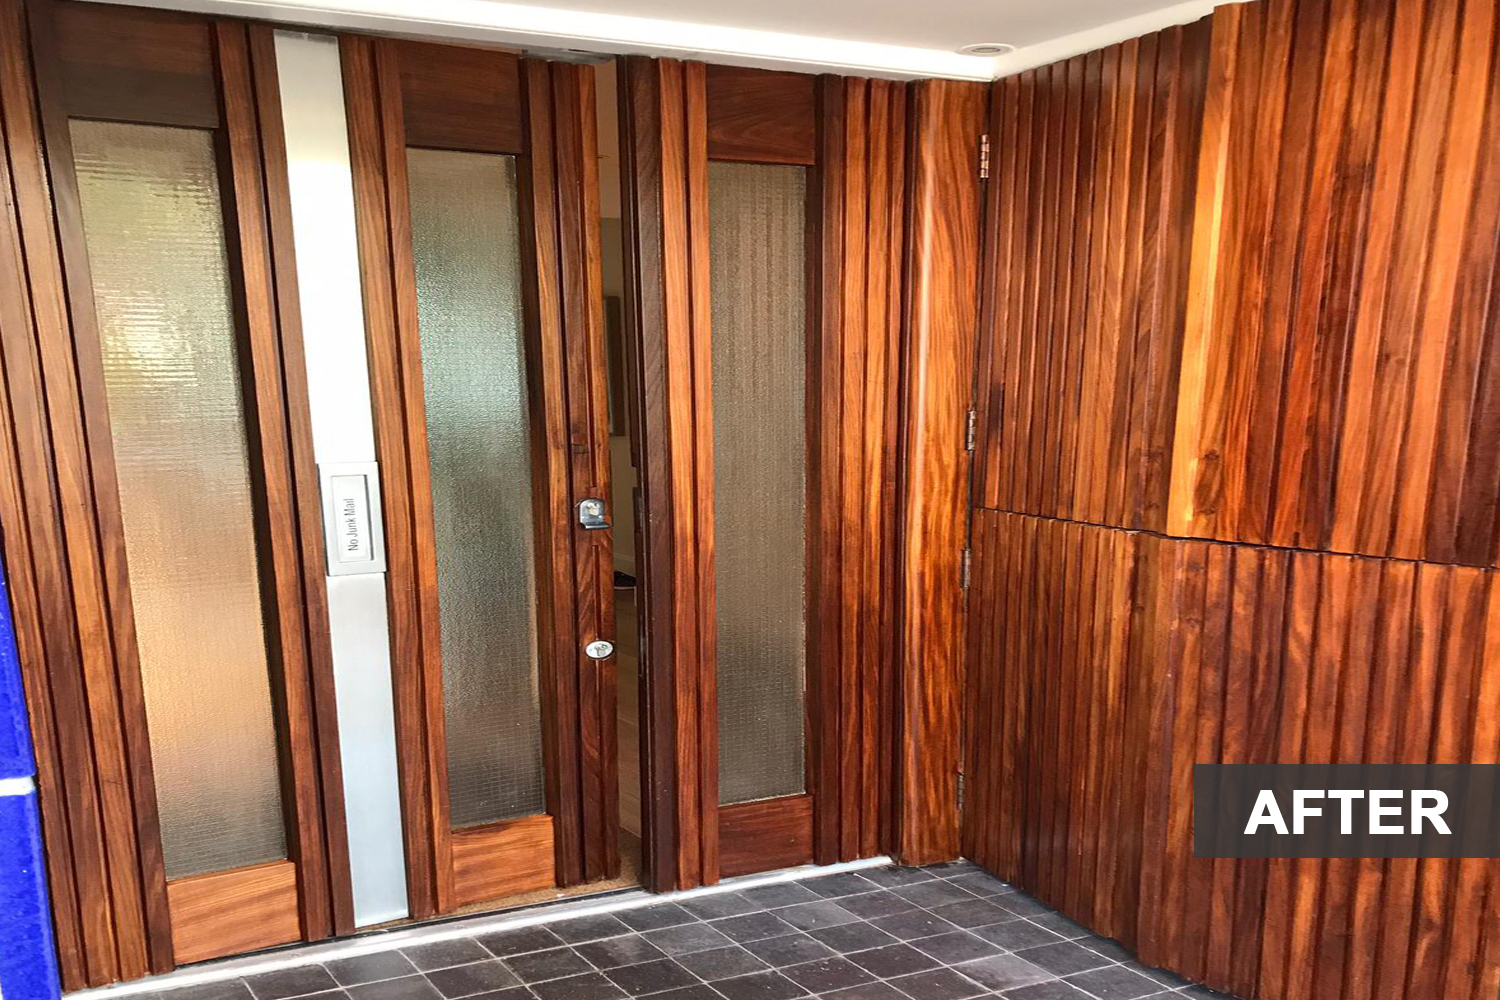 A exterior wooden door after restoration